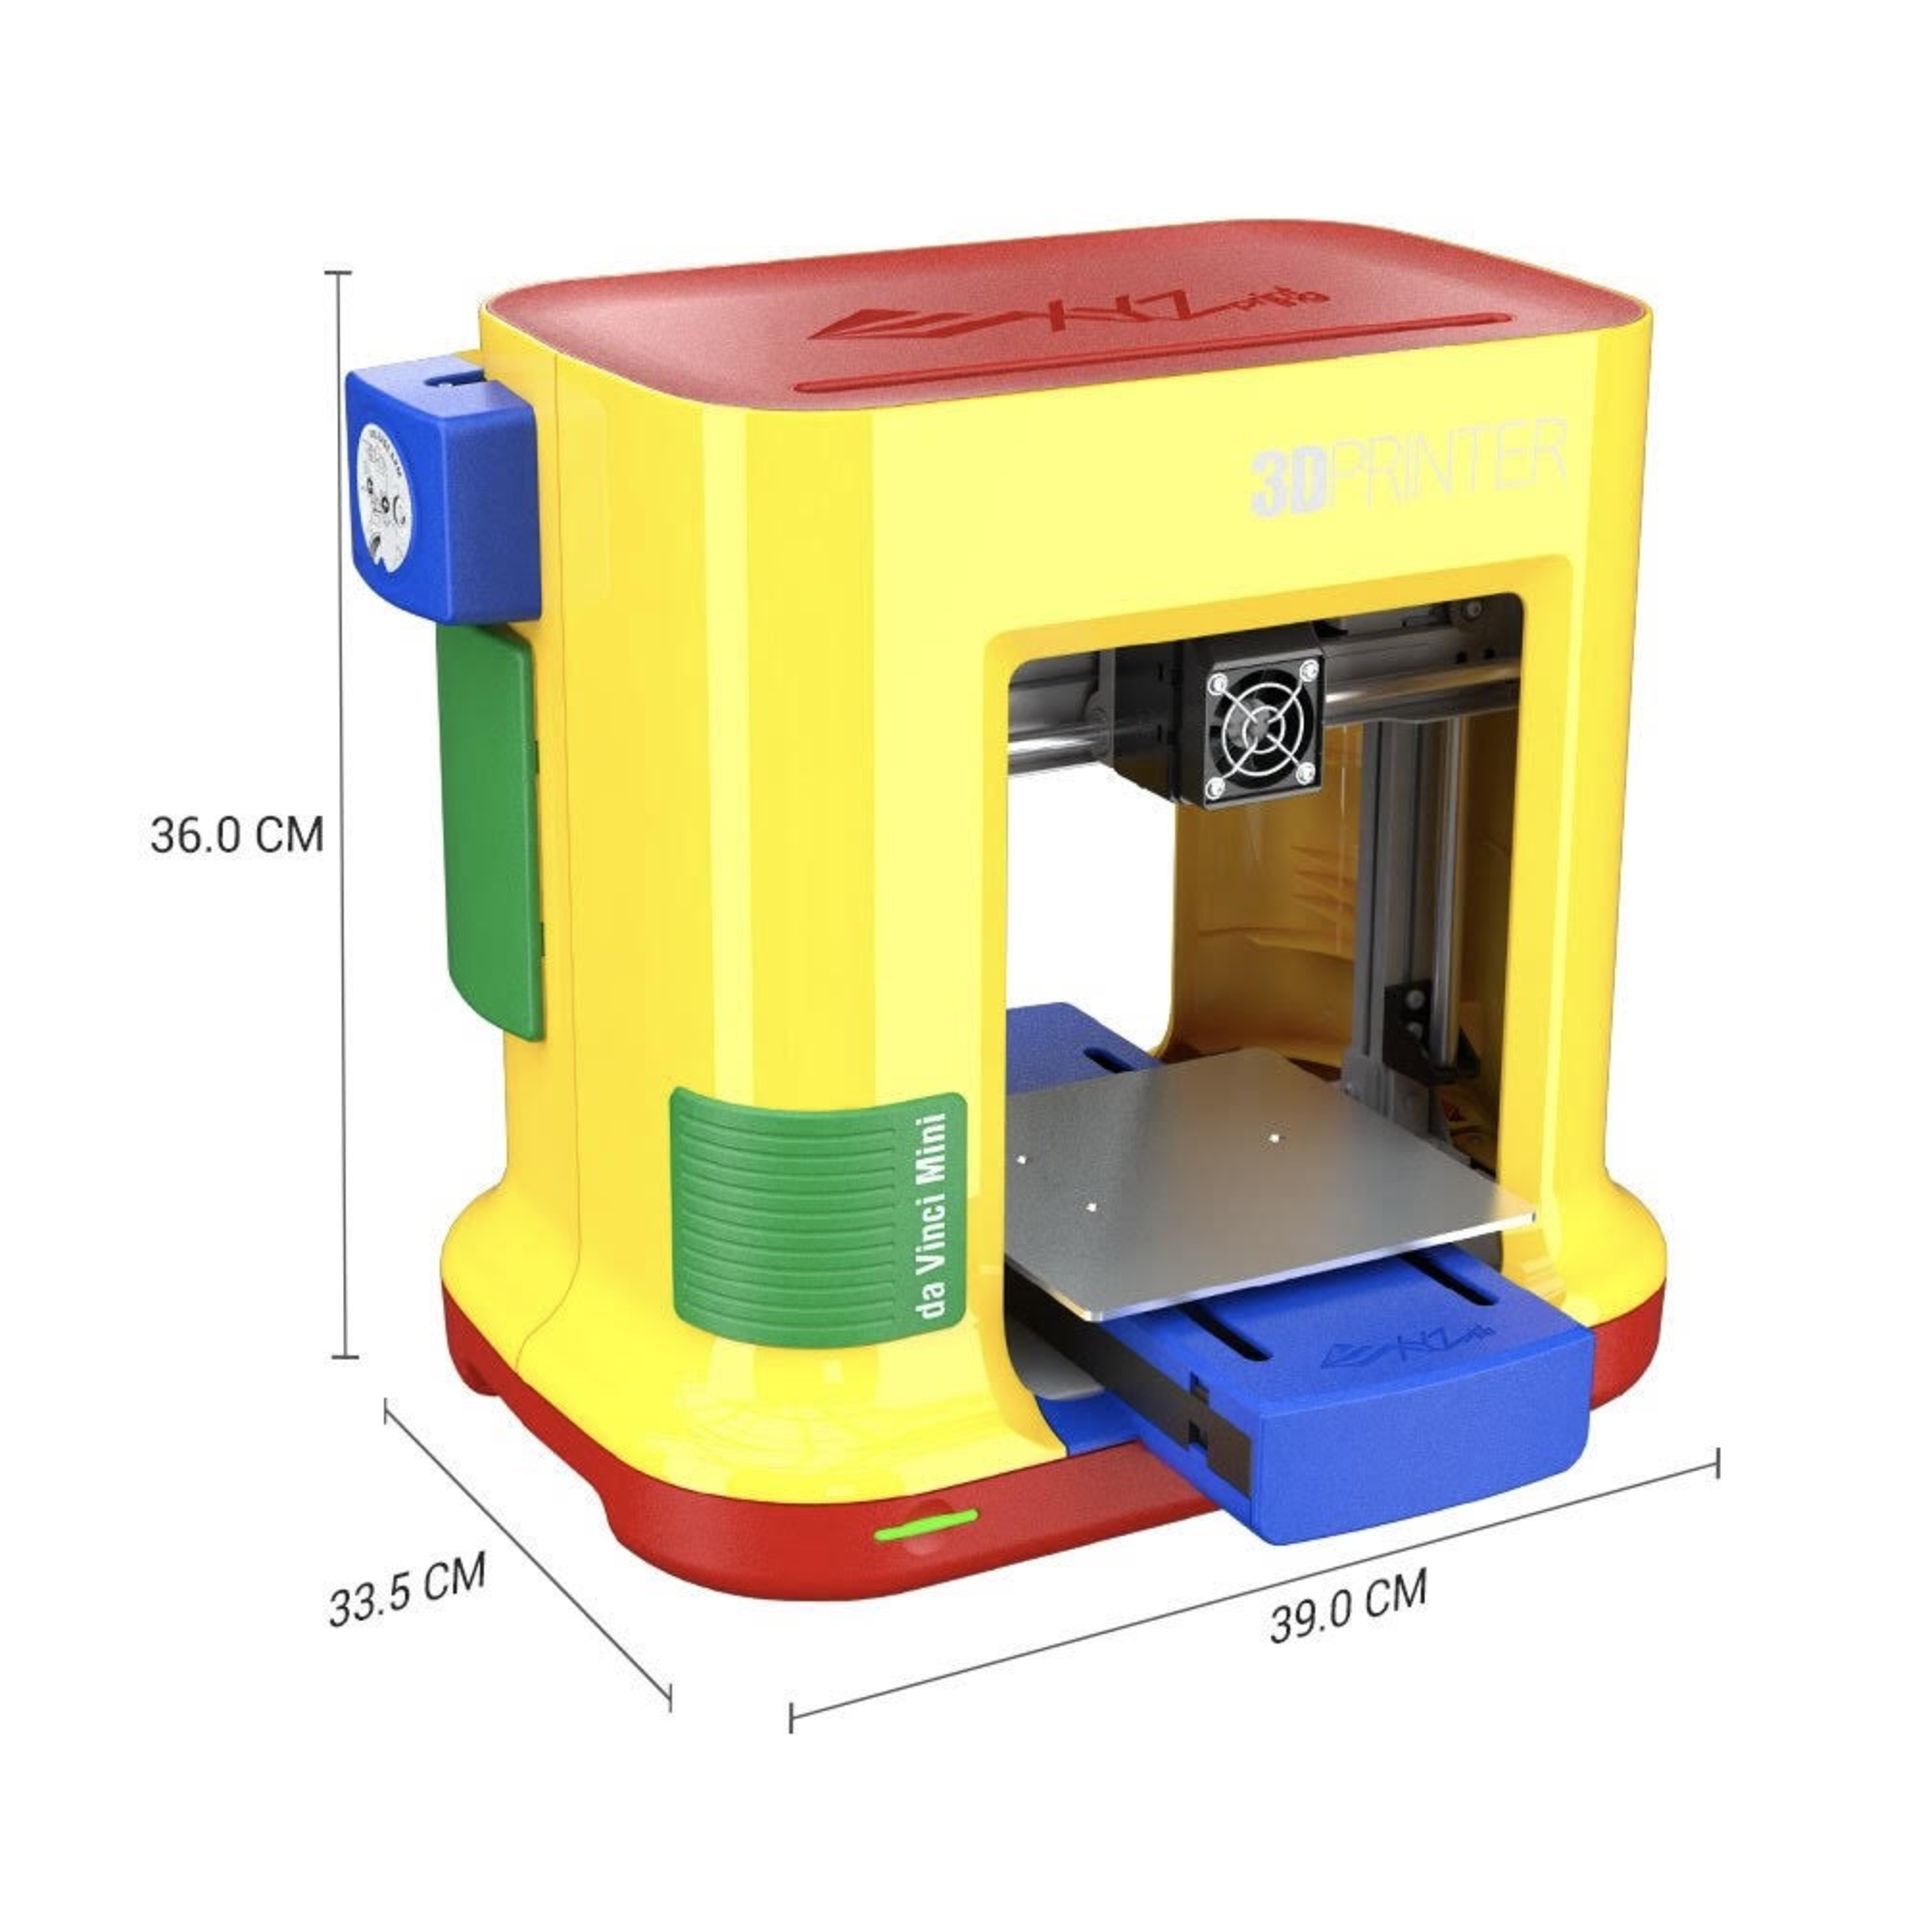 XYZ Da Vinci Minimaker 3D Printer *NO VAT* - Image 2 of 3